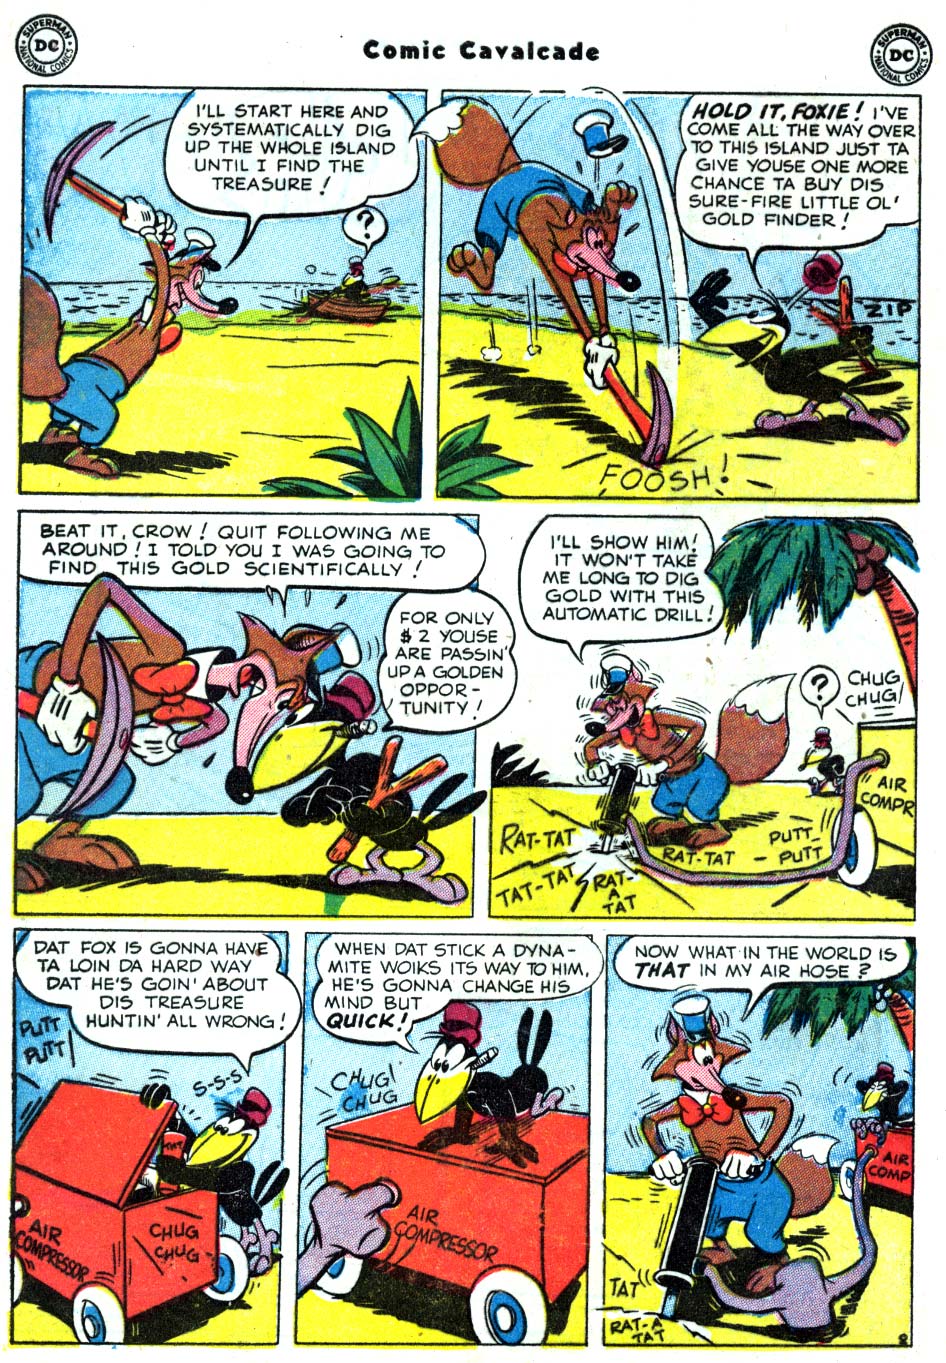 Comic Cavalcade issue 46 - Page 4